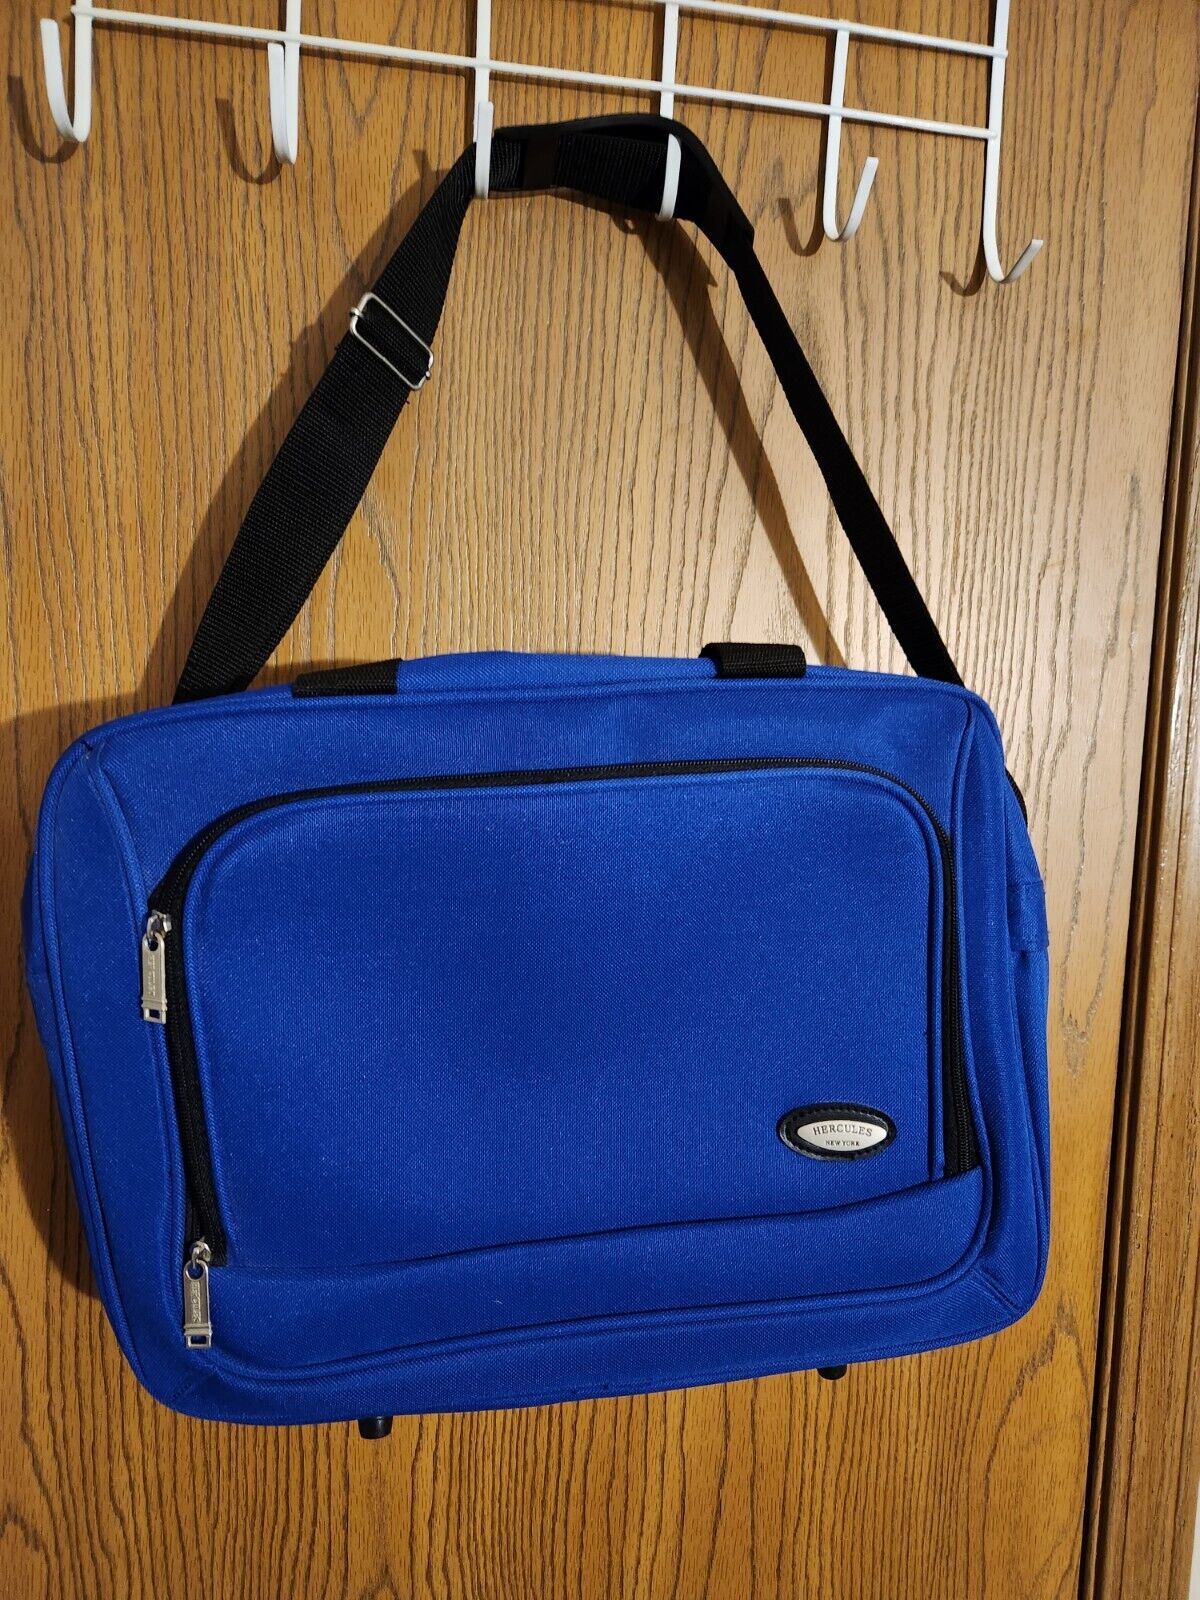 HERCULES NEW YORK Blue Shoulder Messenger Tote Bag Carry On Laptop 16x12x5